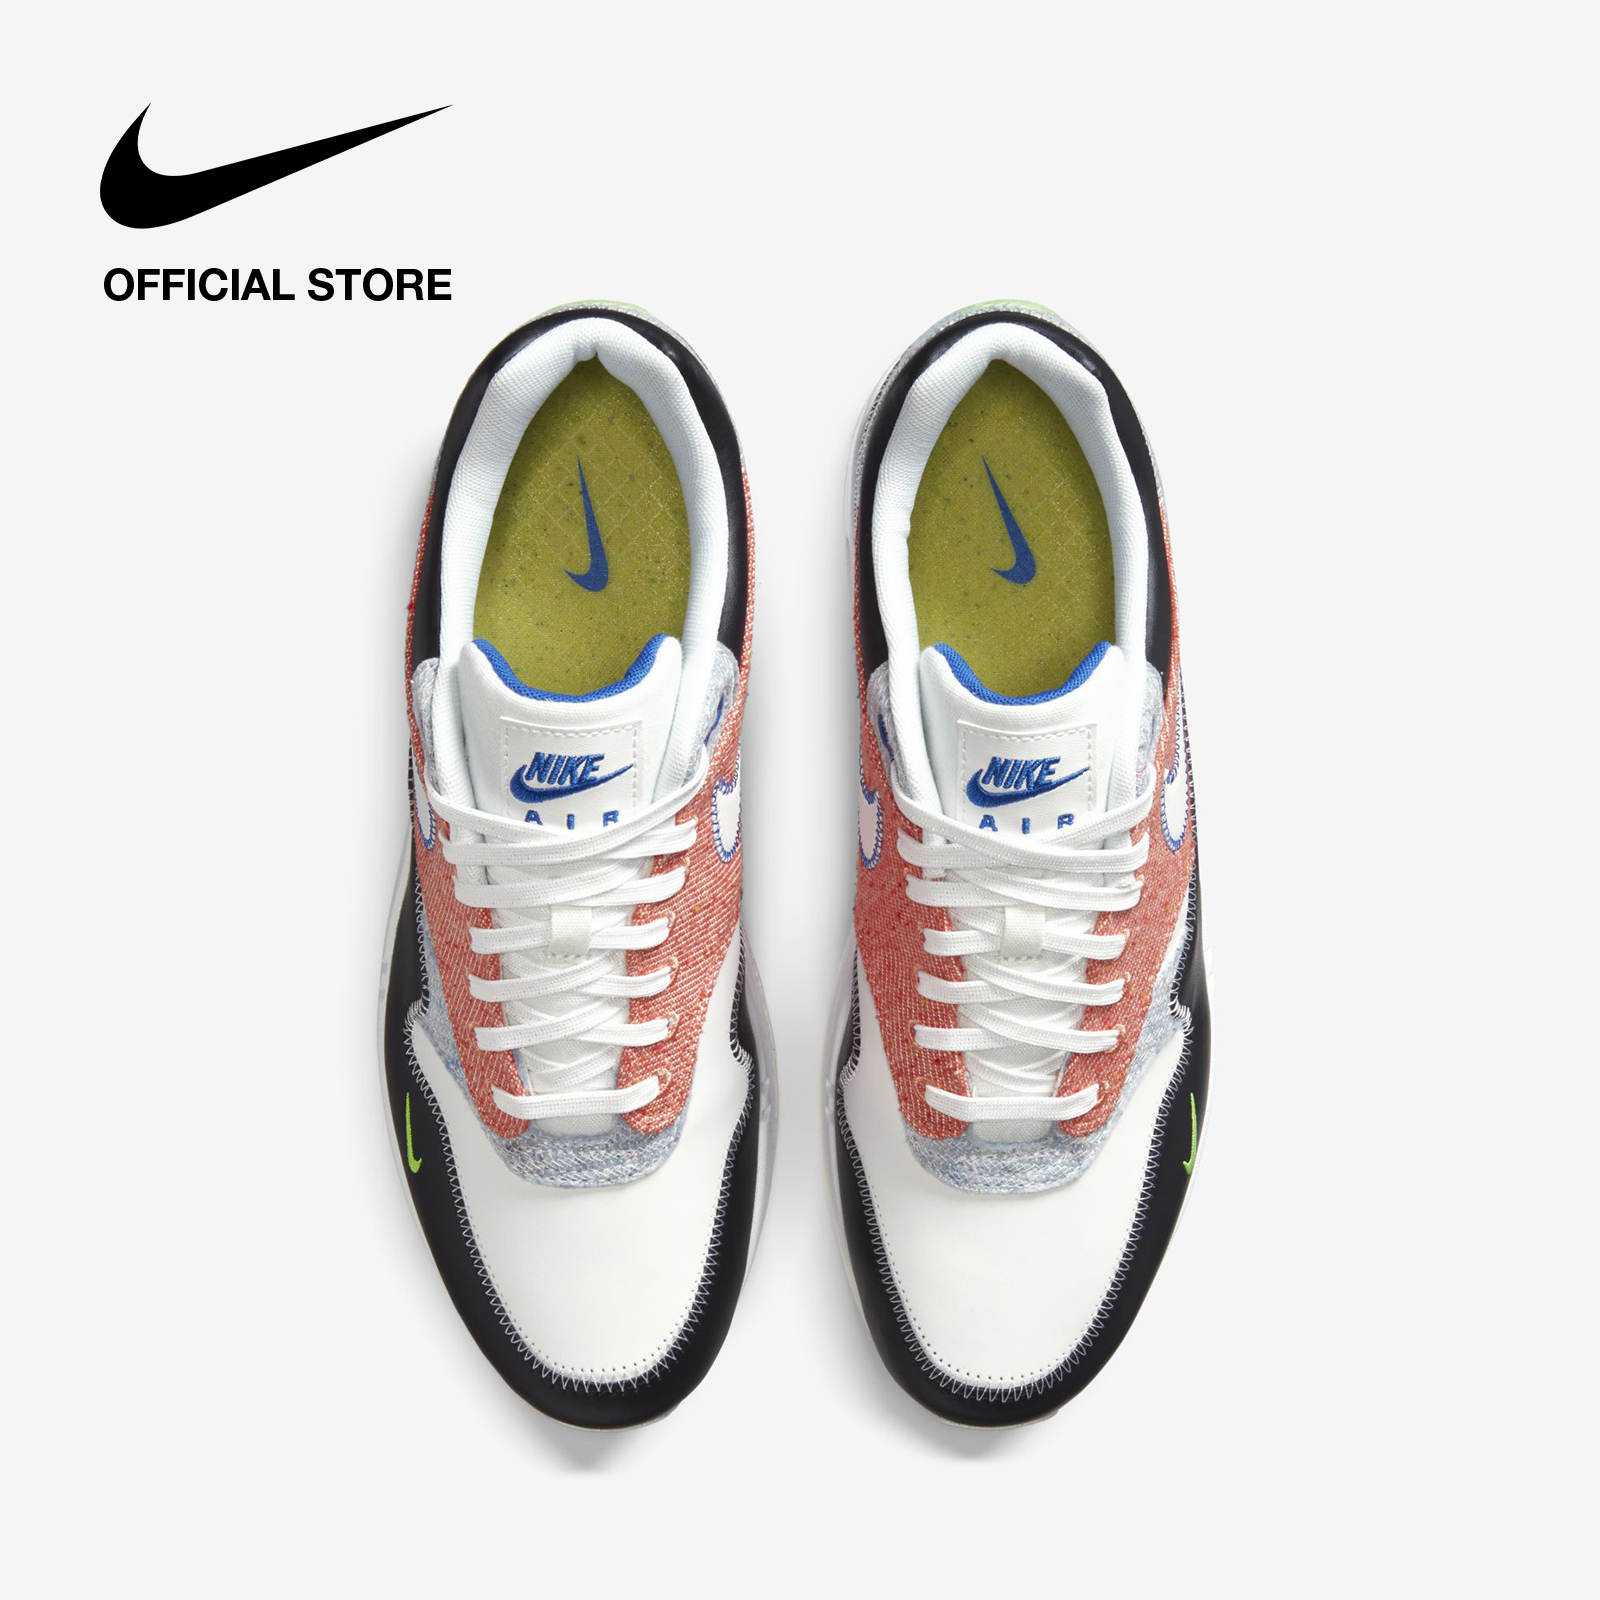 Nike Men's Air Max 1 Shoes - White รองเท้าผู้ชาย Nike Air Max 1 - สีขาว